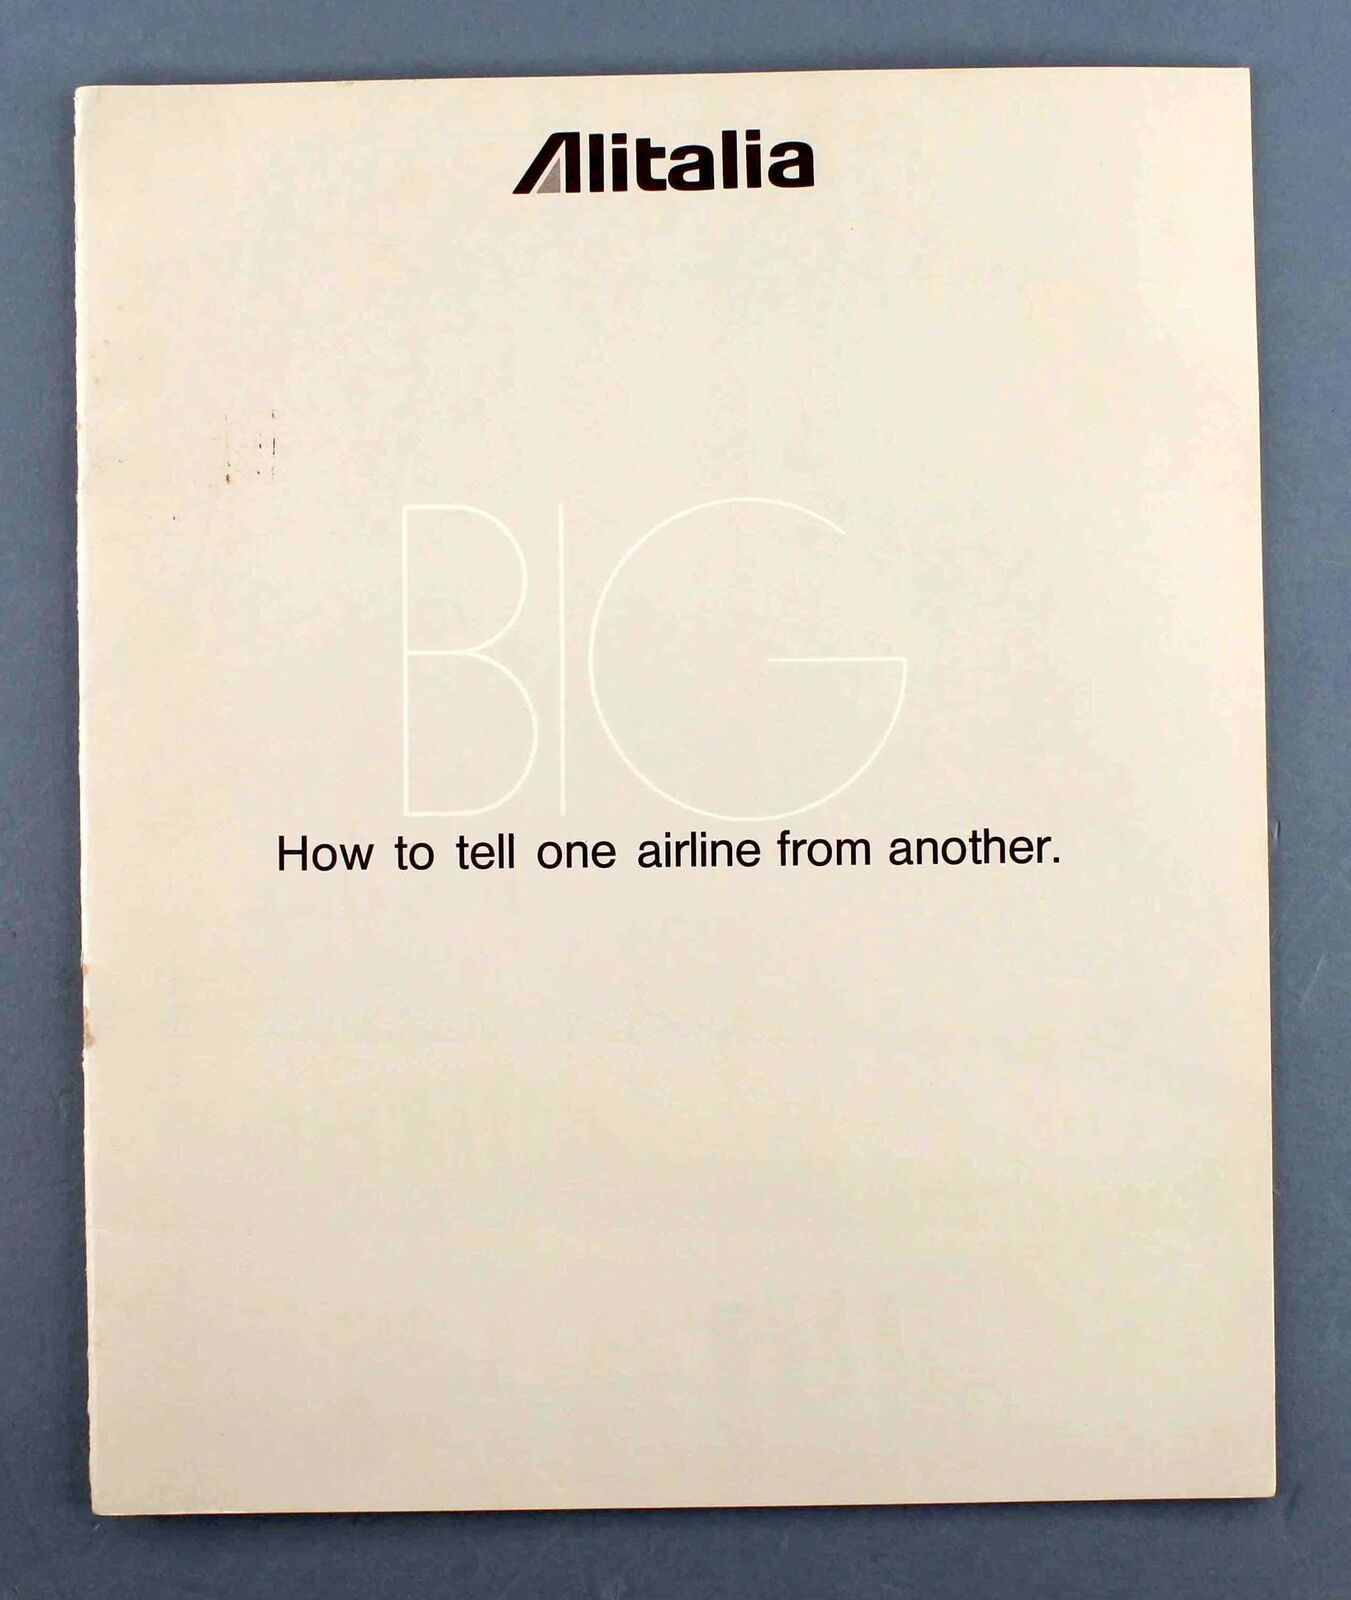 ALITALIA FACTS VINTAGE AIRLINE BROCHURE 1971 BOEING 747